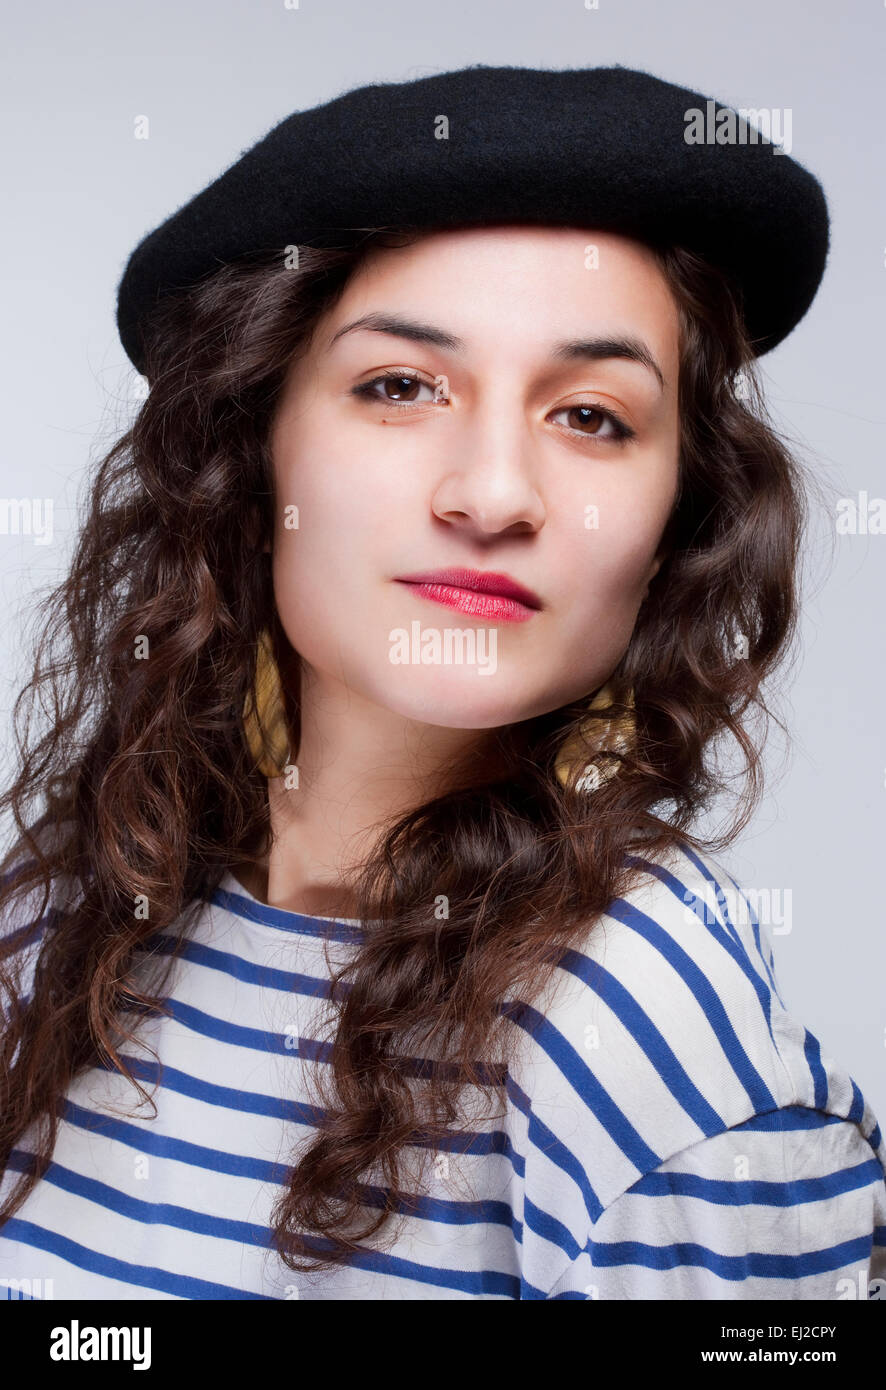 Portrait of a young woman with Hat Barrett et T-shirt à rayures Banque D'Images